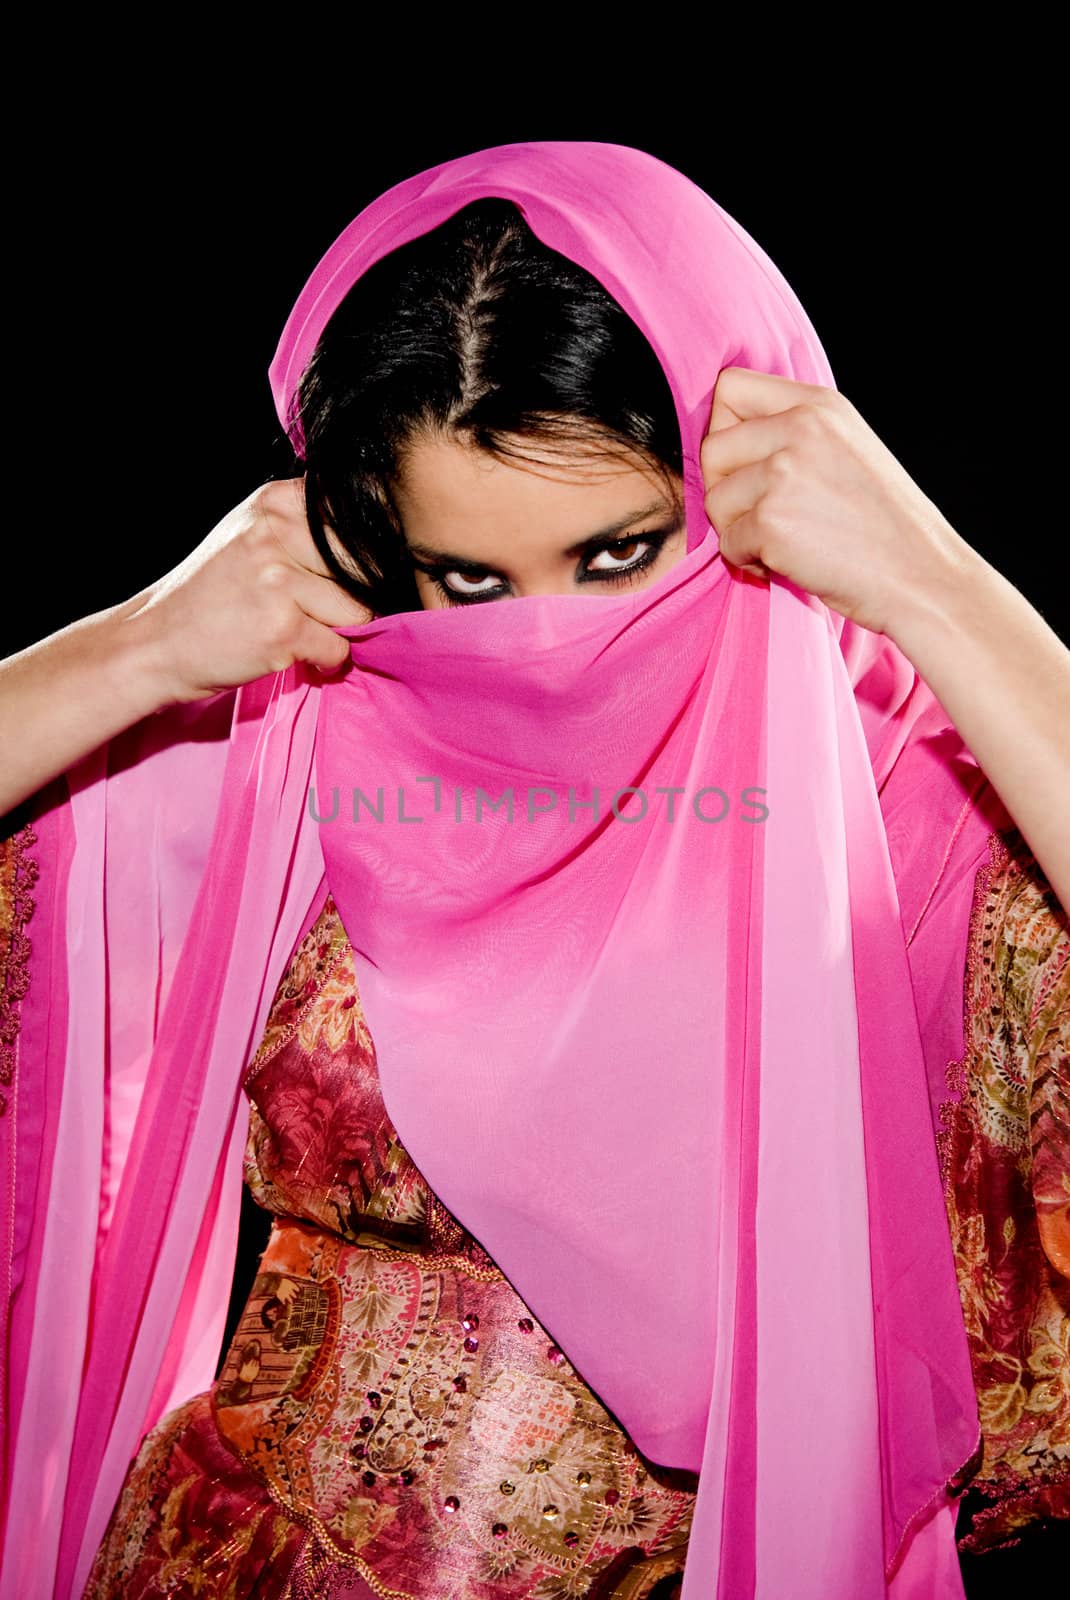 Arabian woman wearing traditional dress on black background